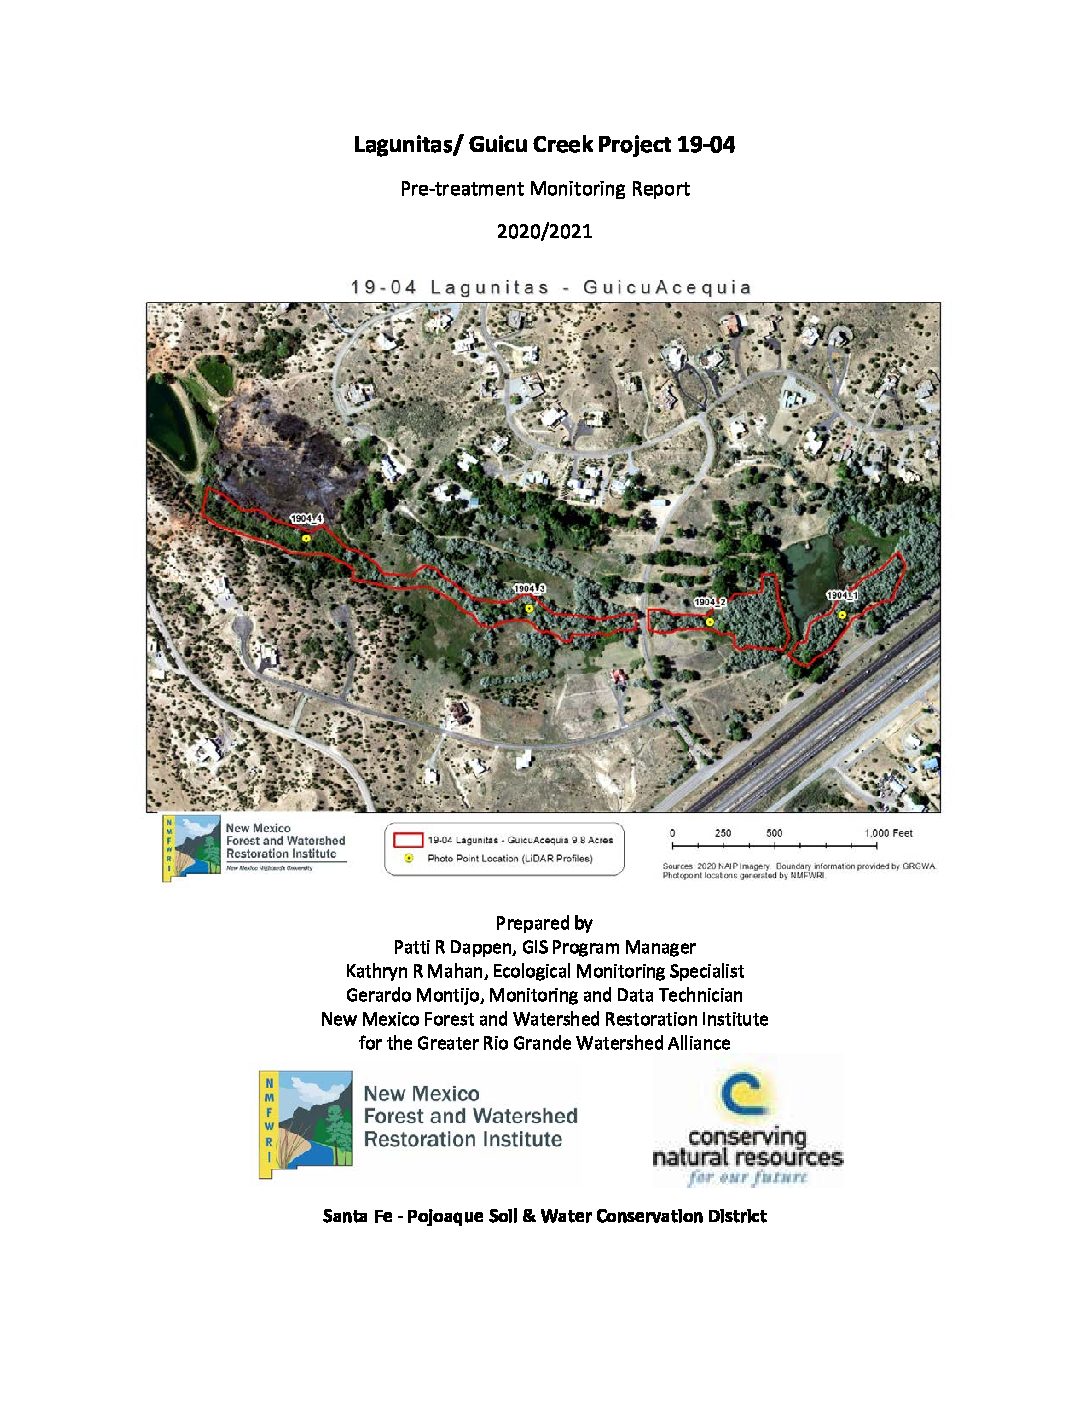 Lagunitas Guicu Creek Project 19-04 Pre-treatment Monitoring Report 2020-2021